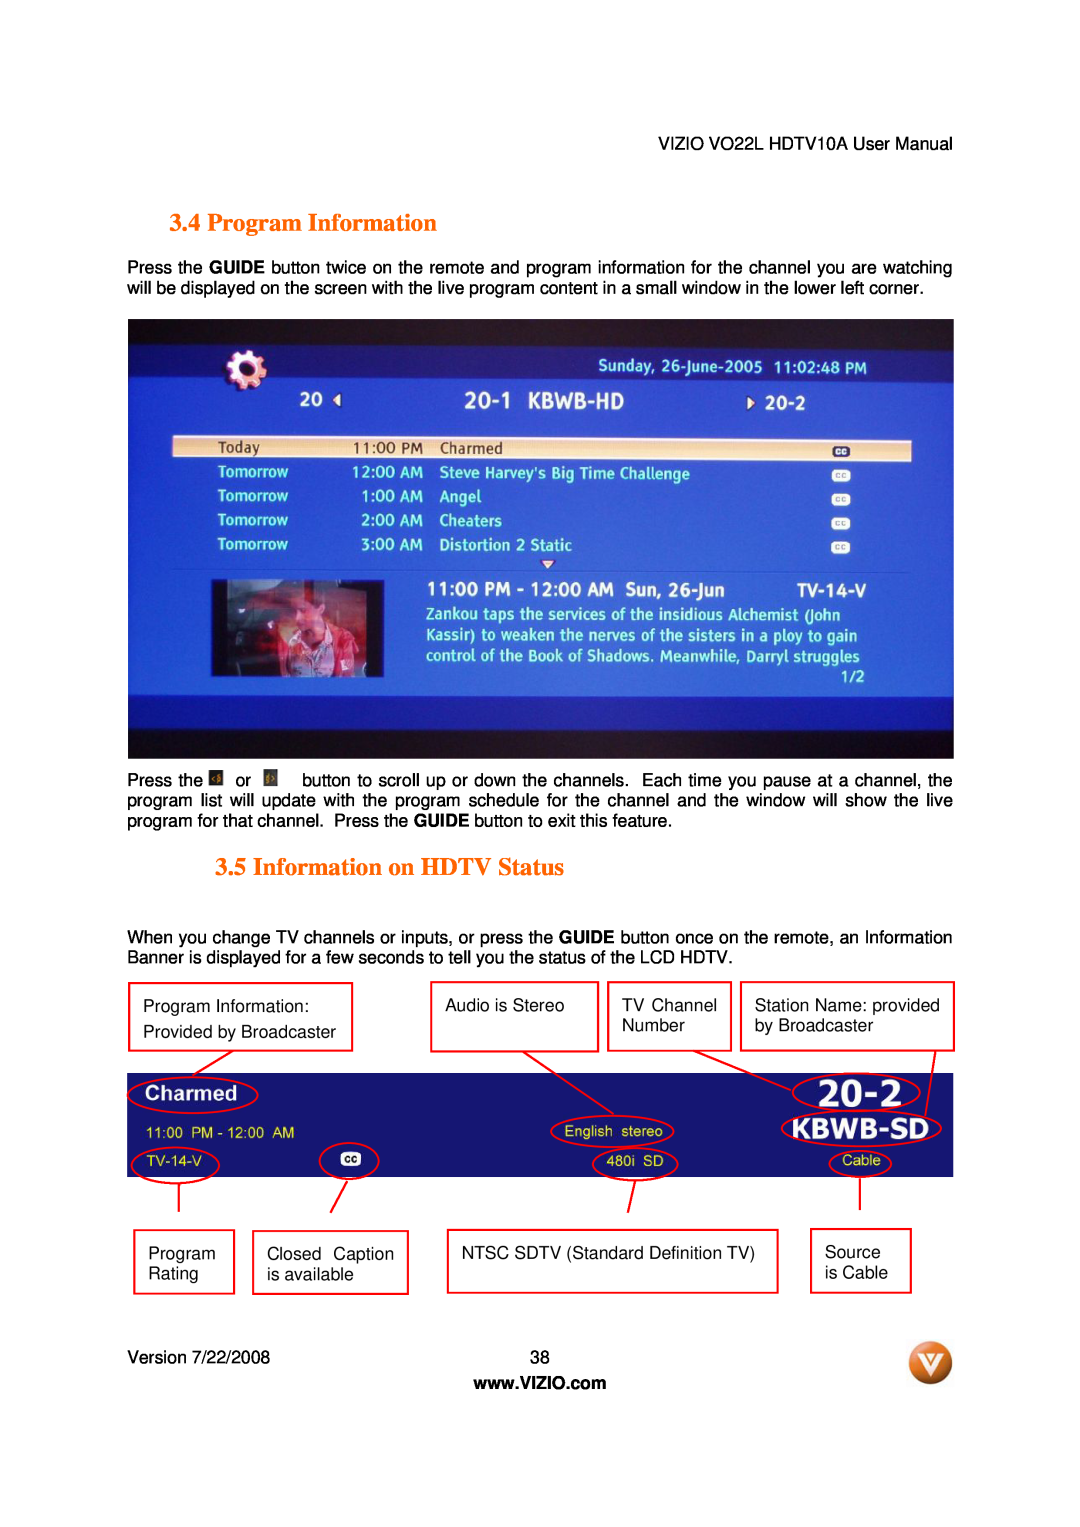 Vizio VO22L user manual Program Information, Information on HDTV Status 